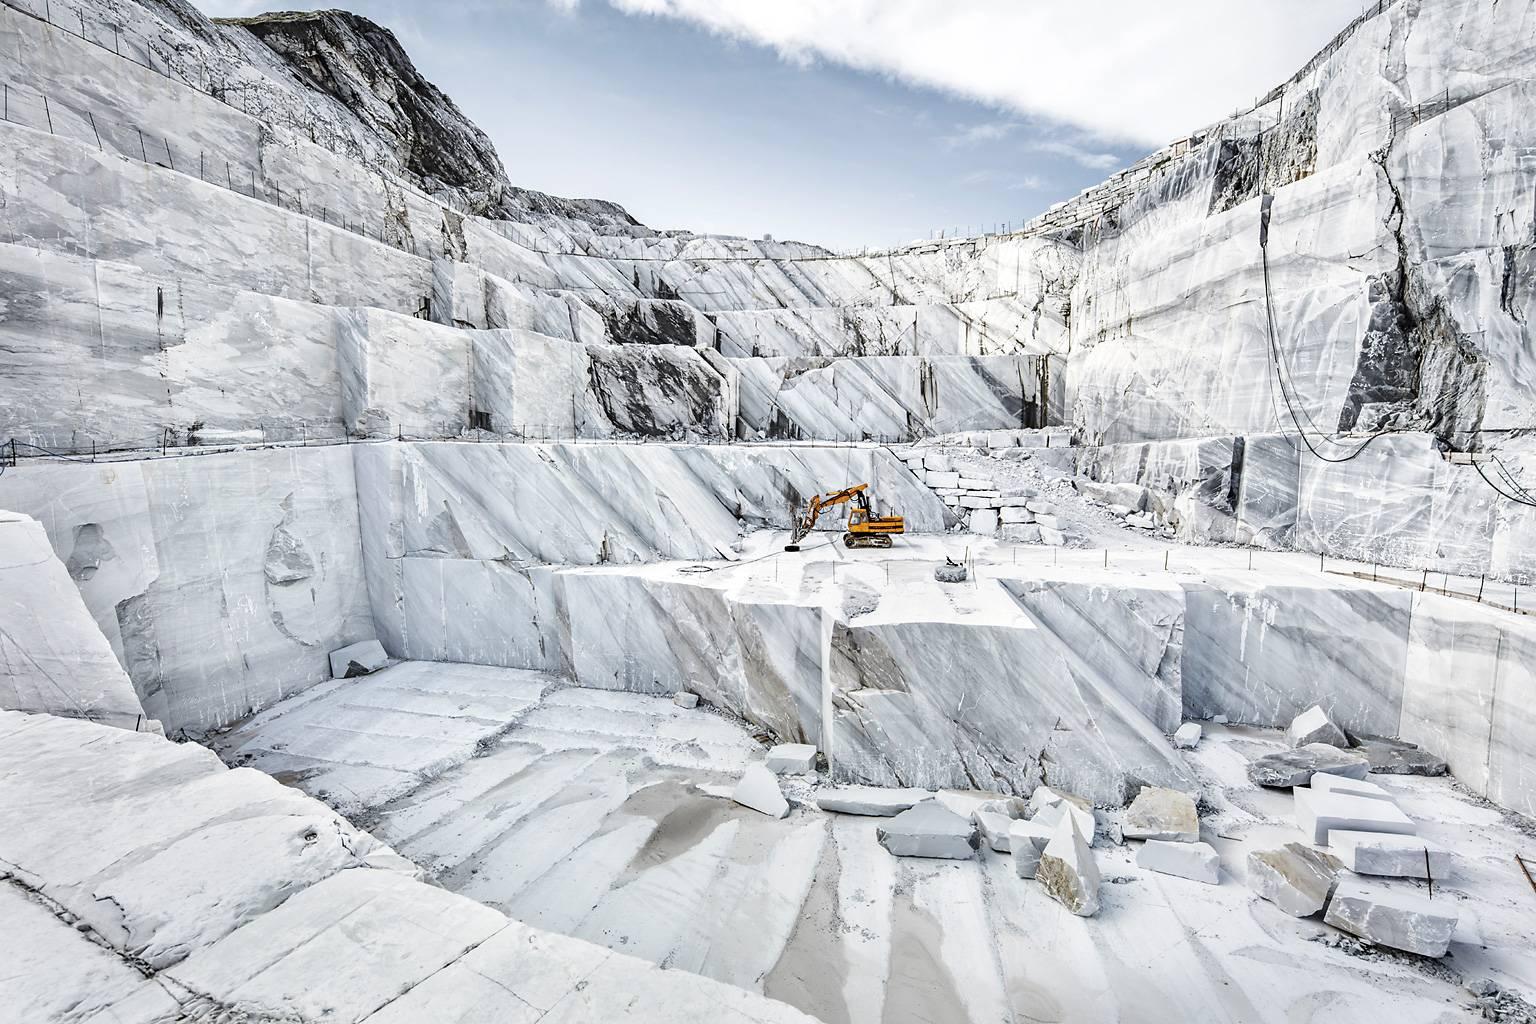 Frank Schott Landscape Photograph - Marmo di Carrara - large format photograph of iconic Italian marble quarry